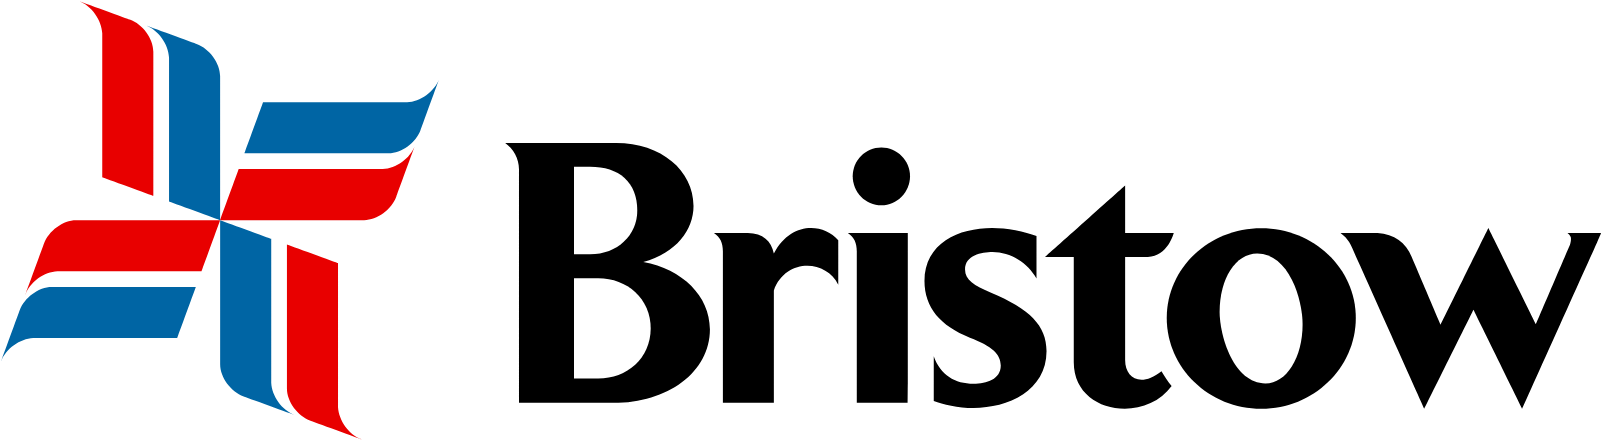 Bristow Group logo large (transparent PNG)